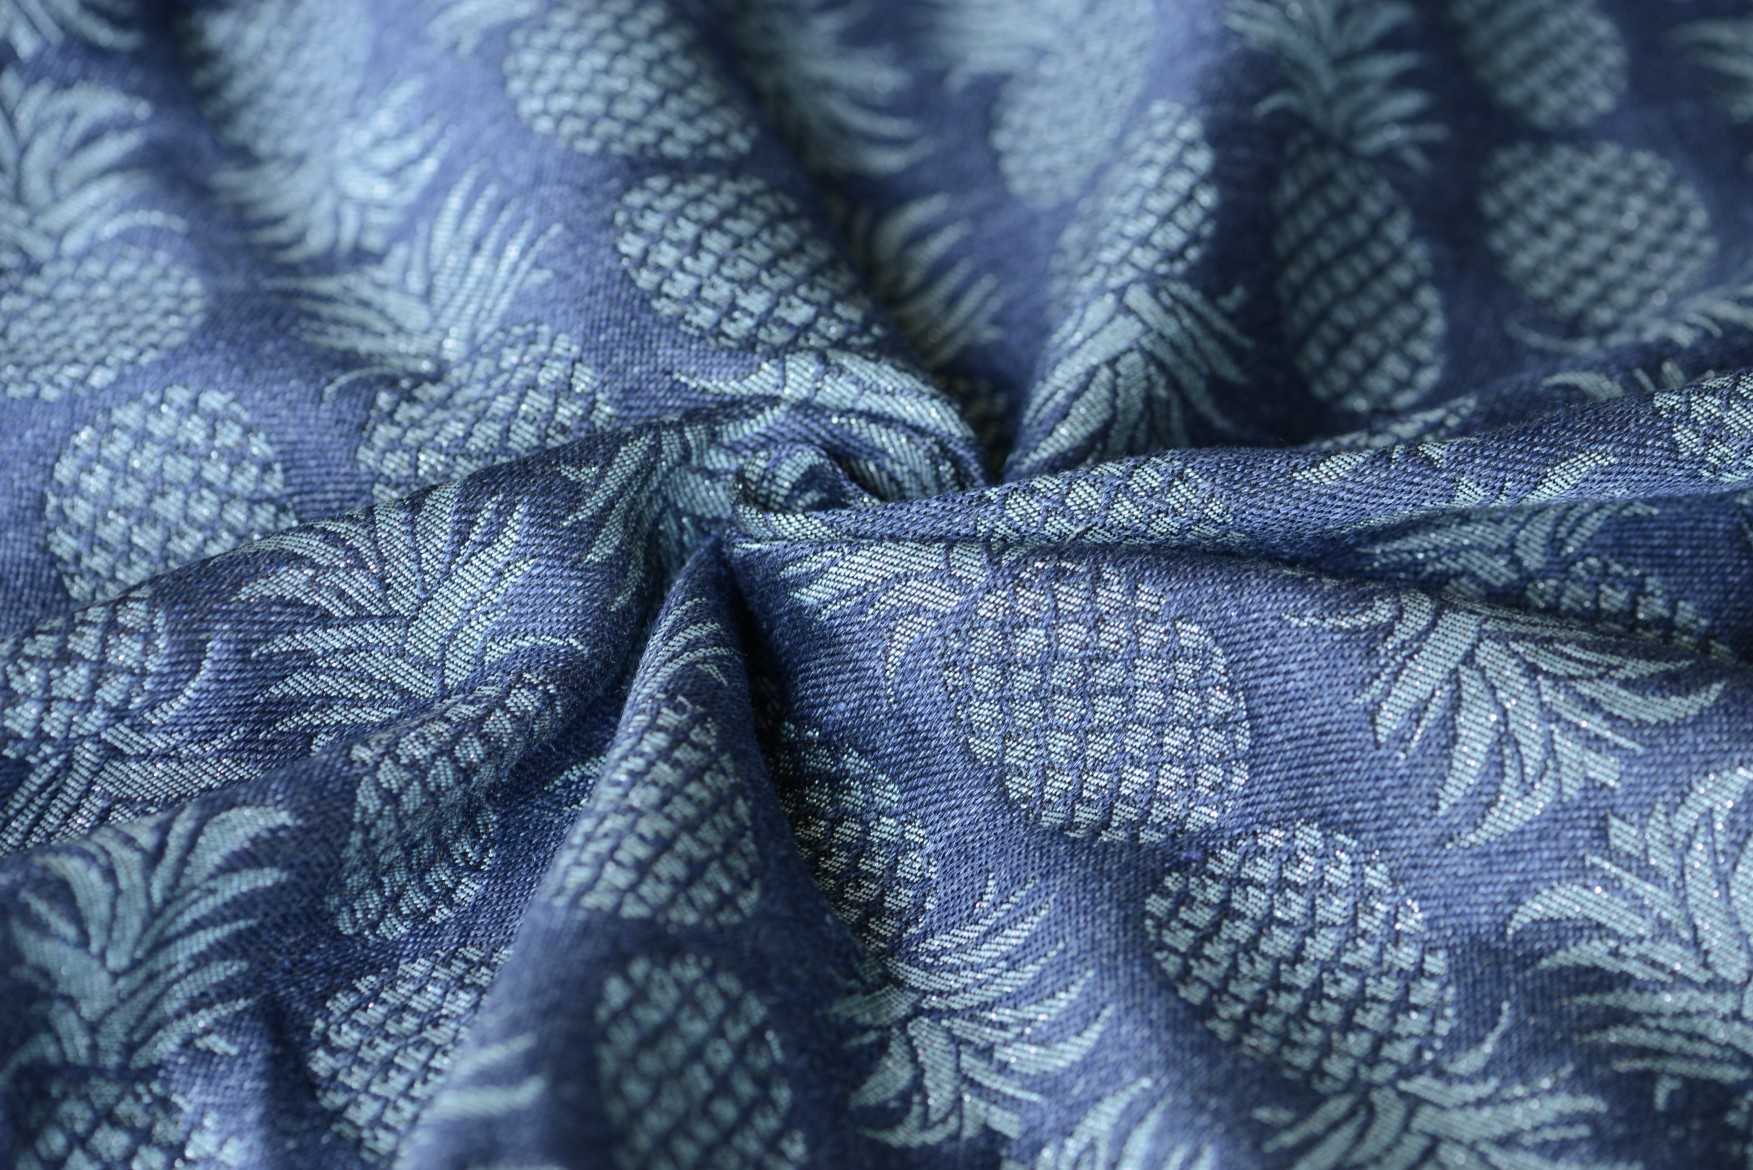 Artipoppe Pina Litha Wrap (linen, merino, polyester, nylon, elastane) Image